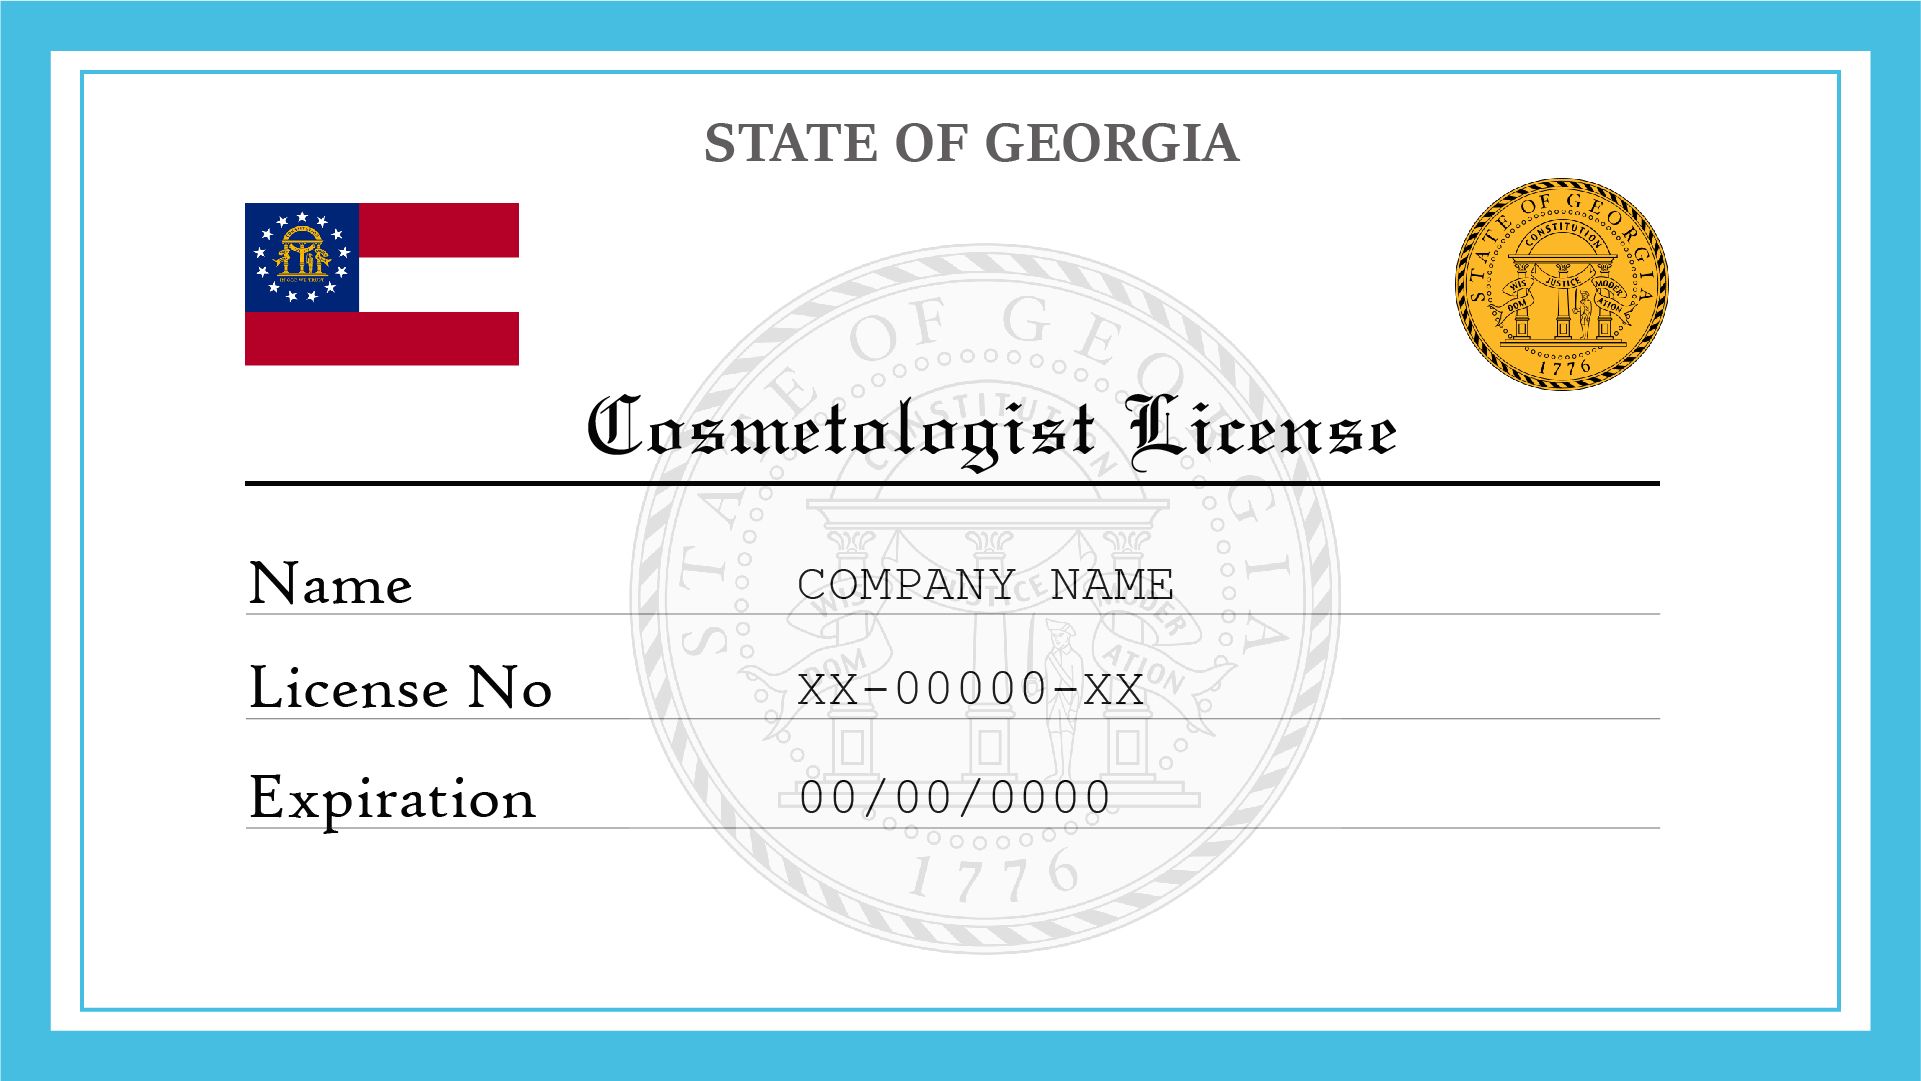 Georgia Cosmetologist License 505eb39536 